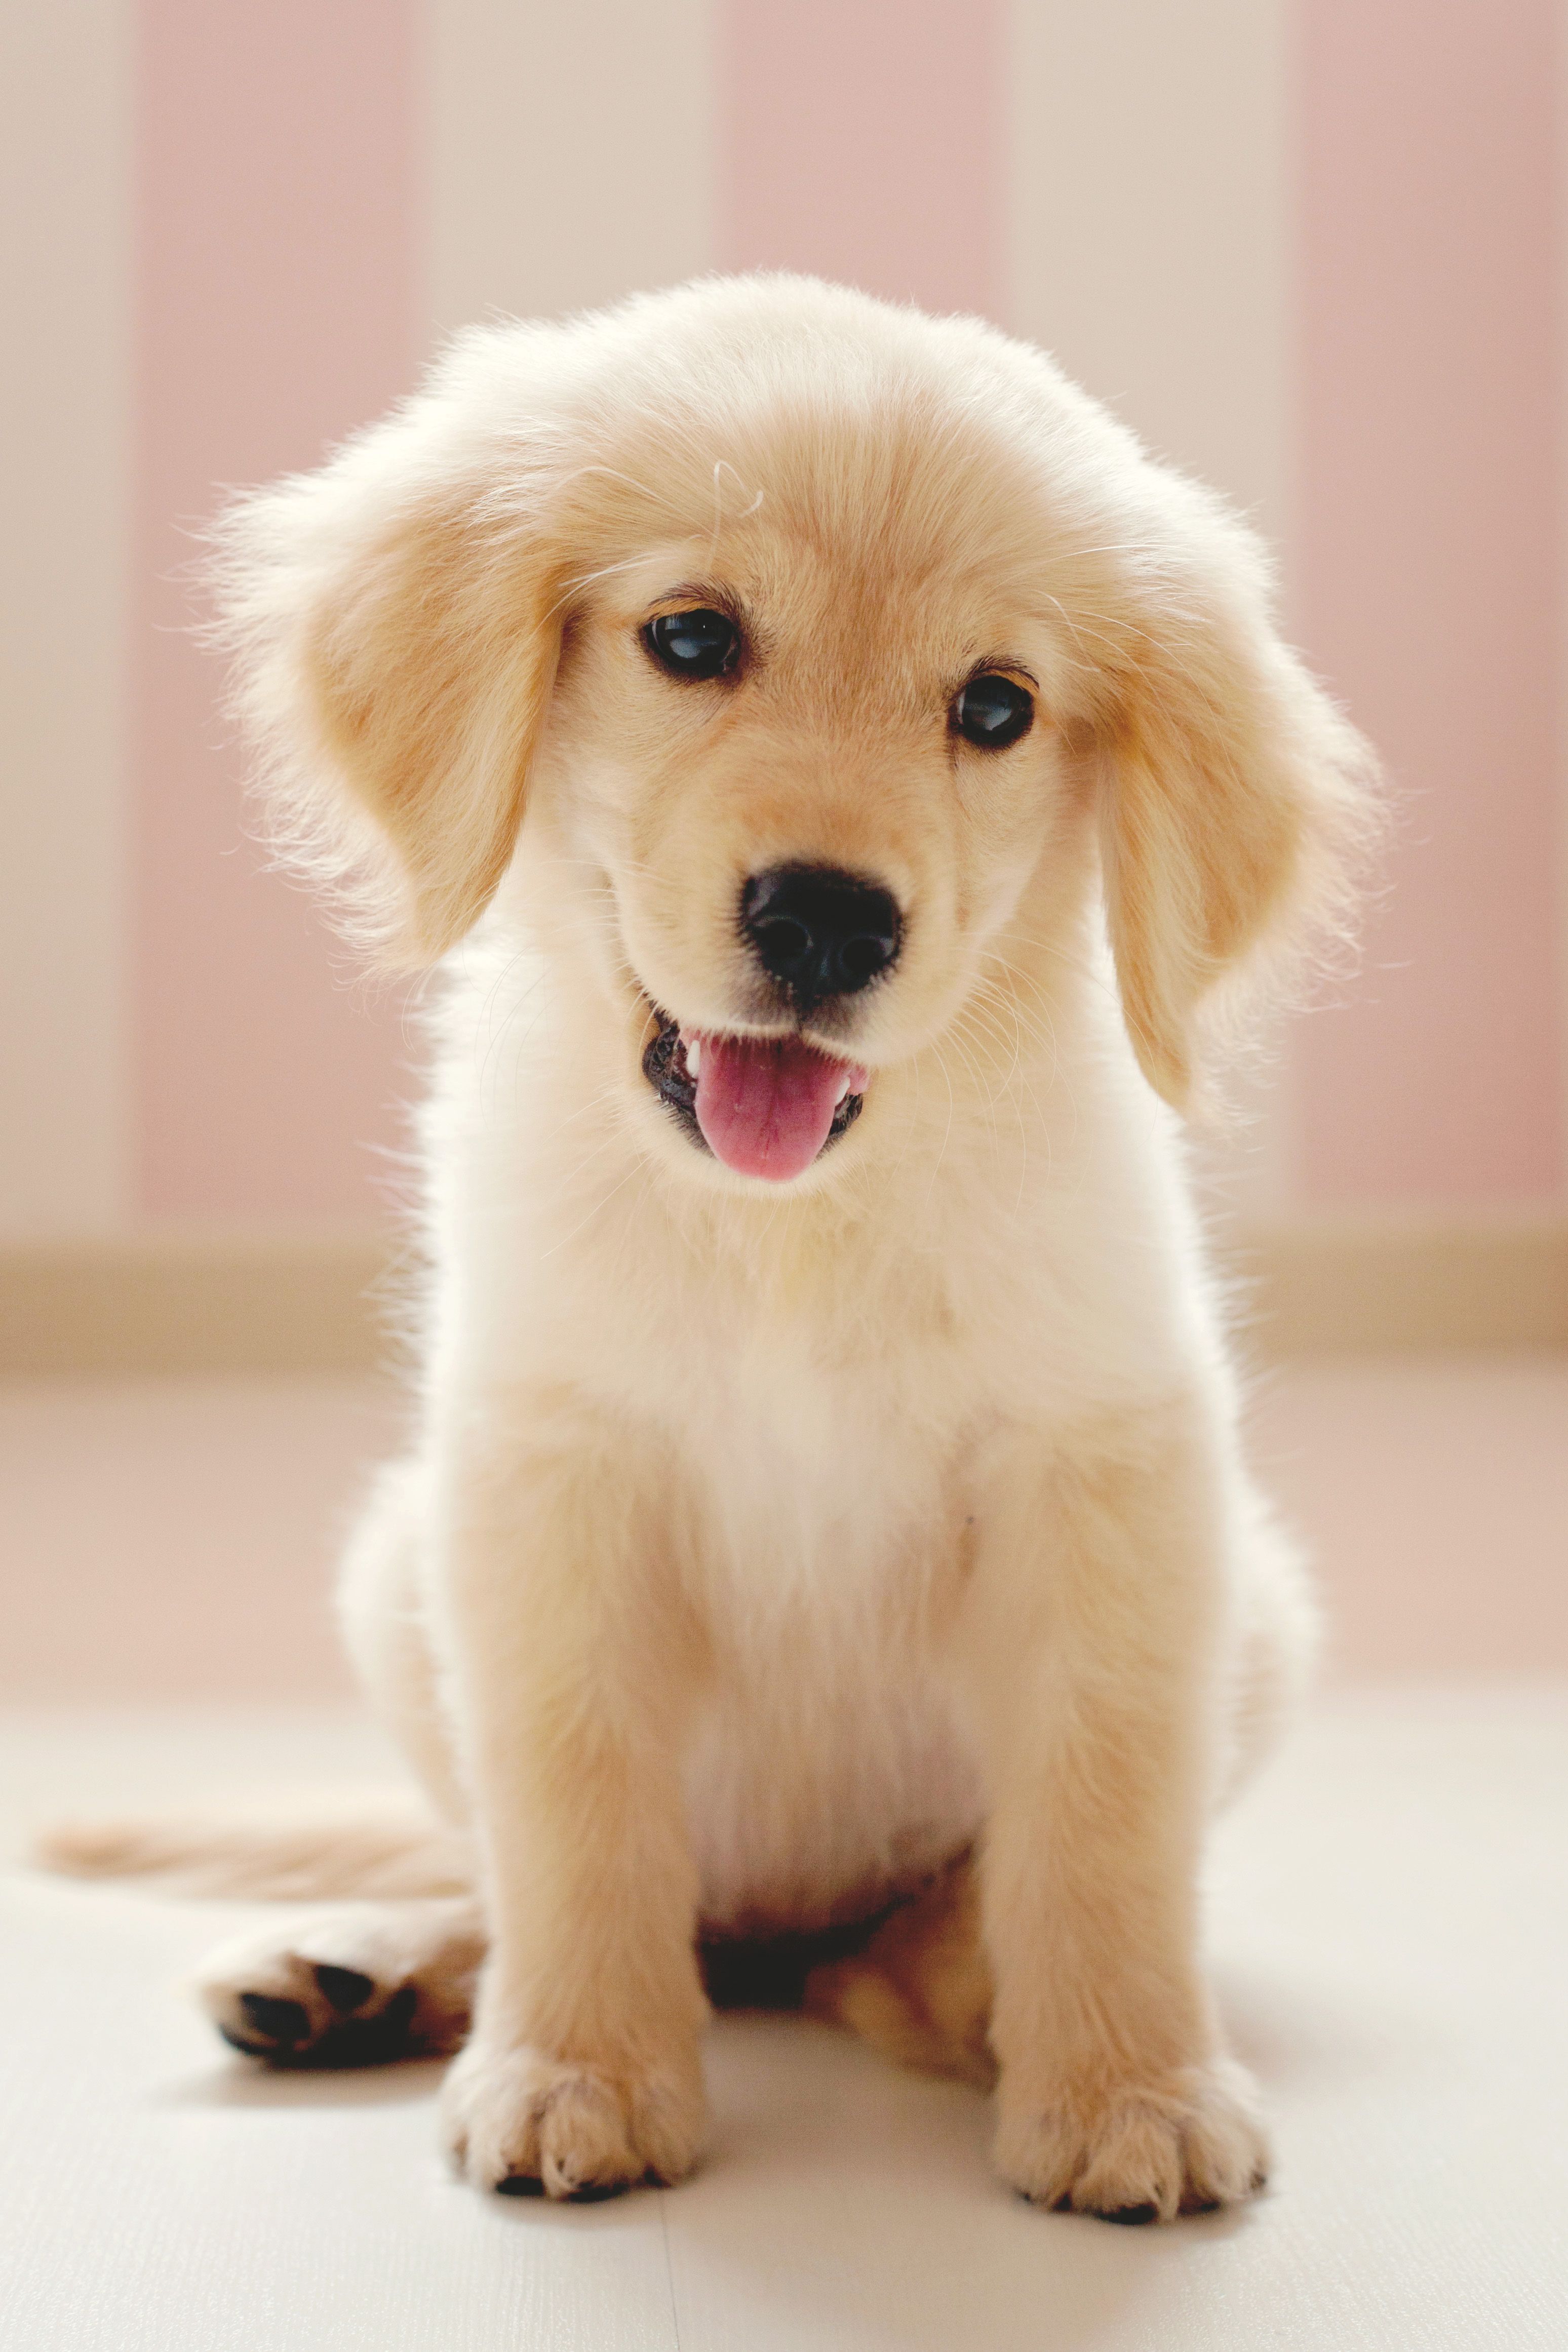 Golden dog puppy Wallpaper Download